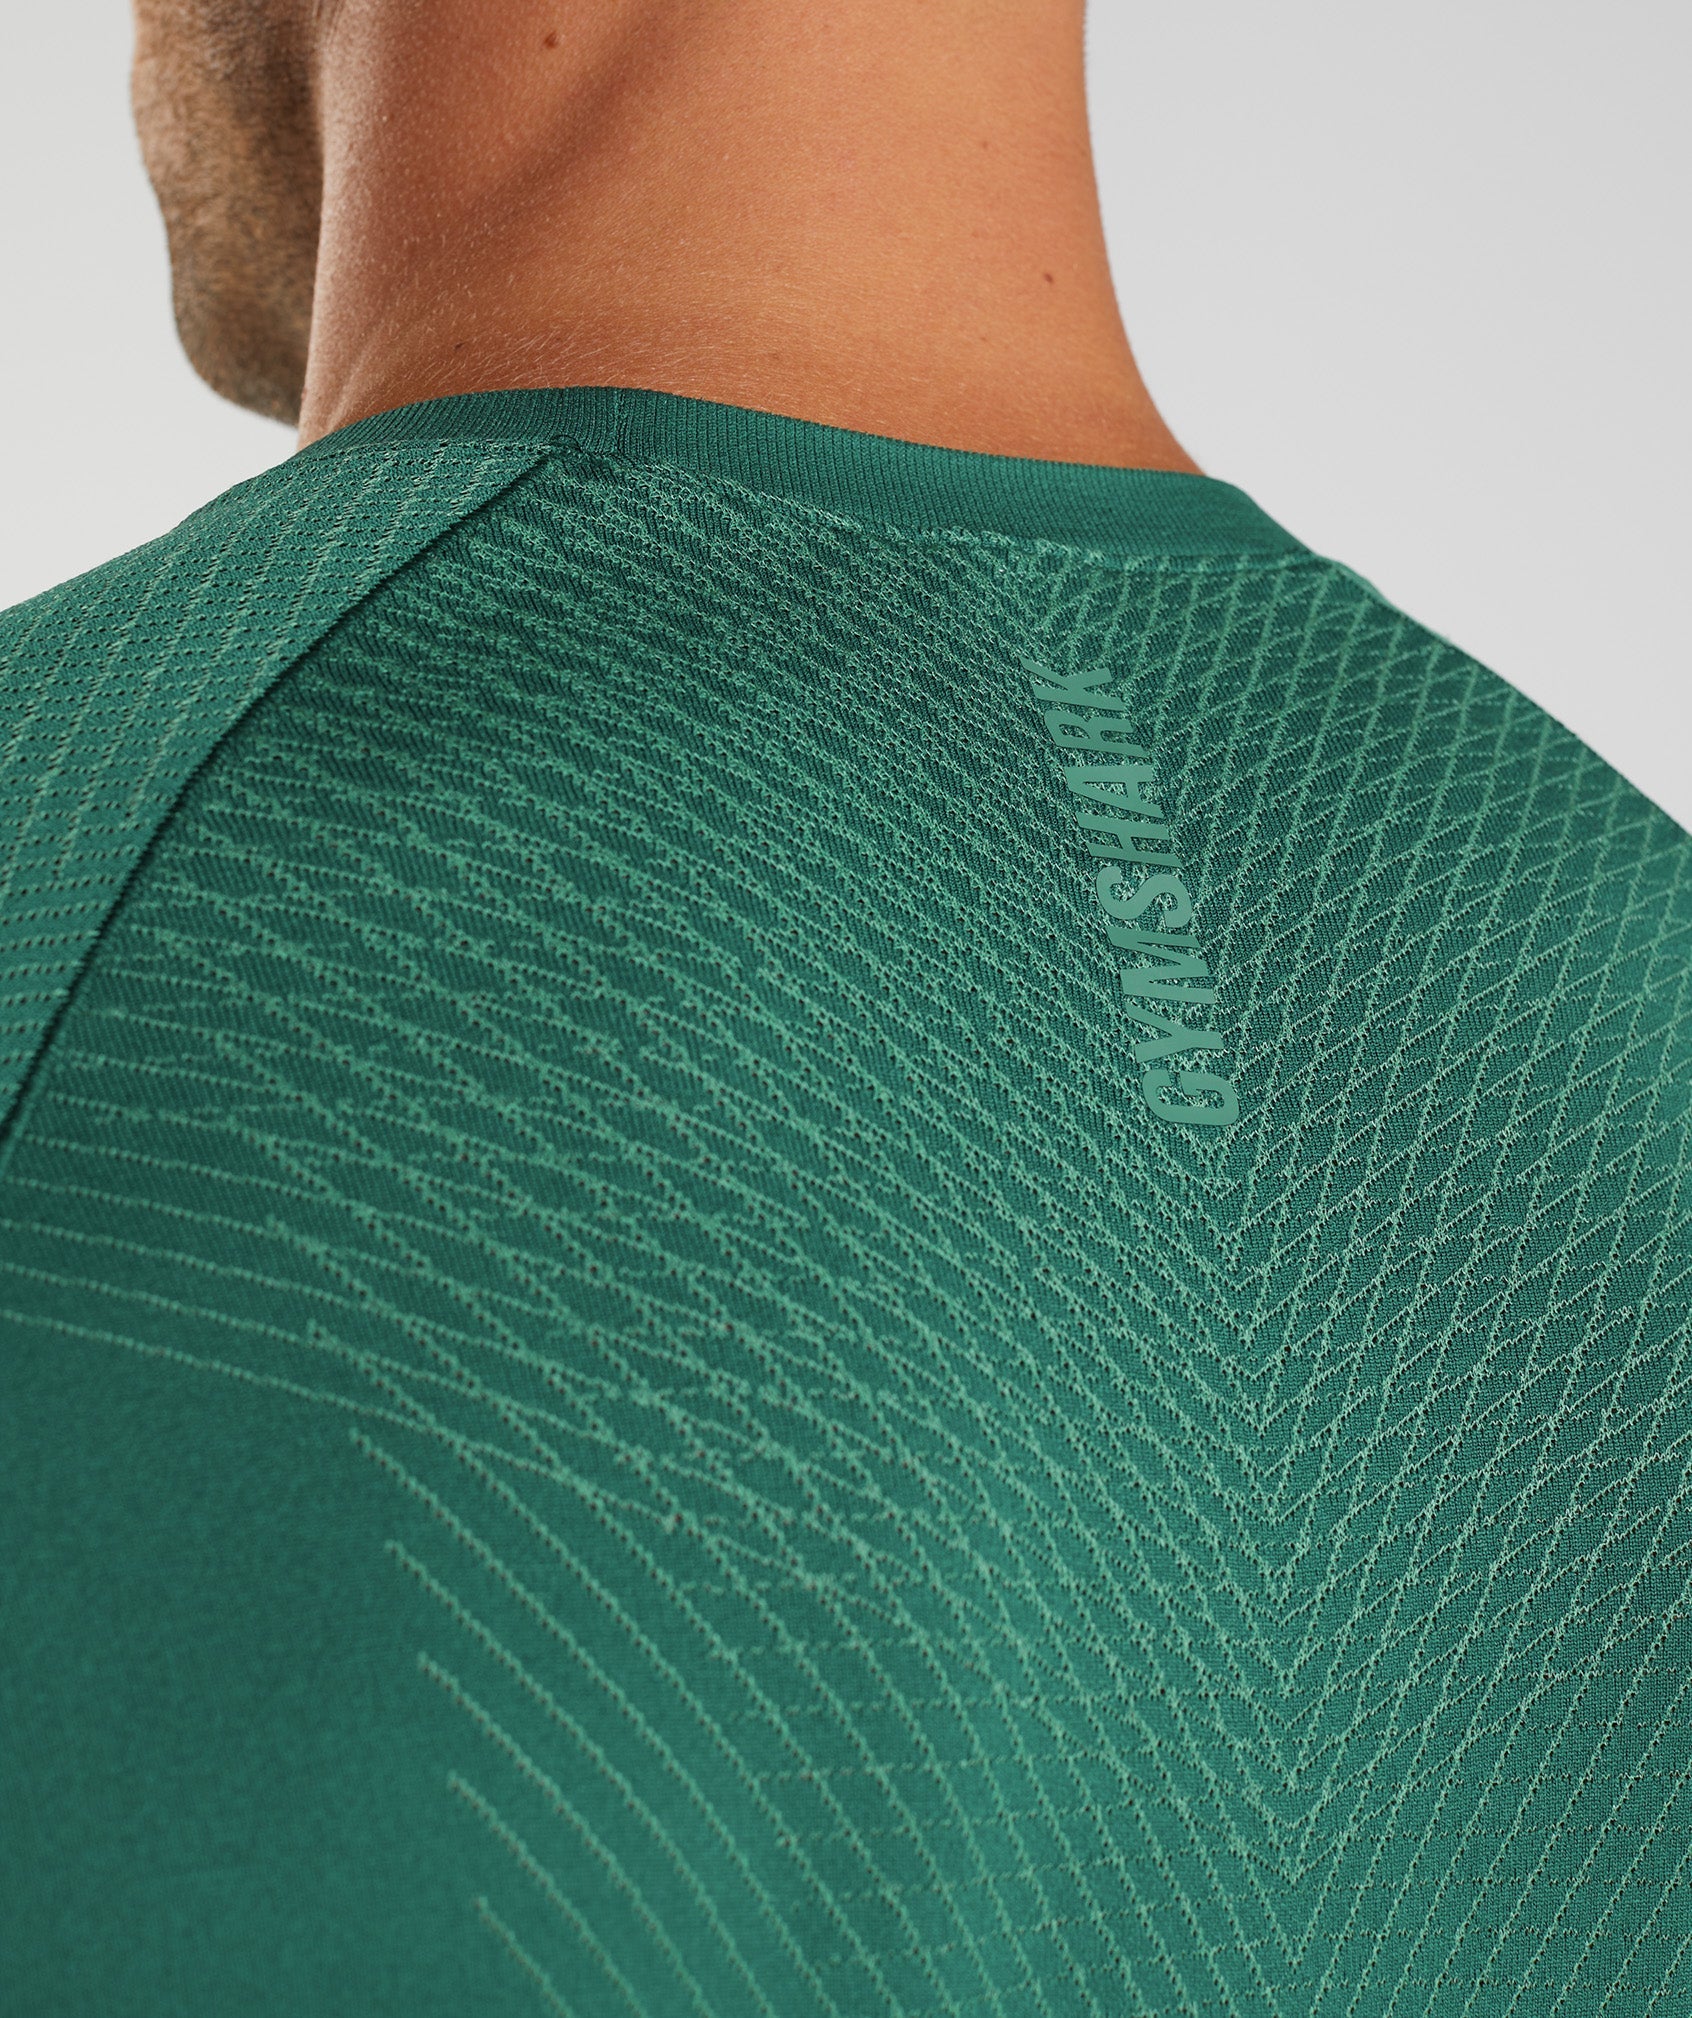 Apex Seamless Long Sleeve T-Shirt in Woodland Green/Hoya Green - view 5